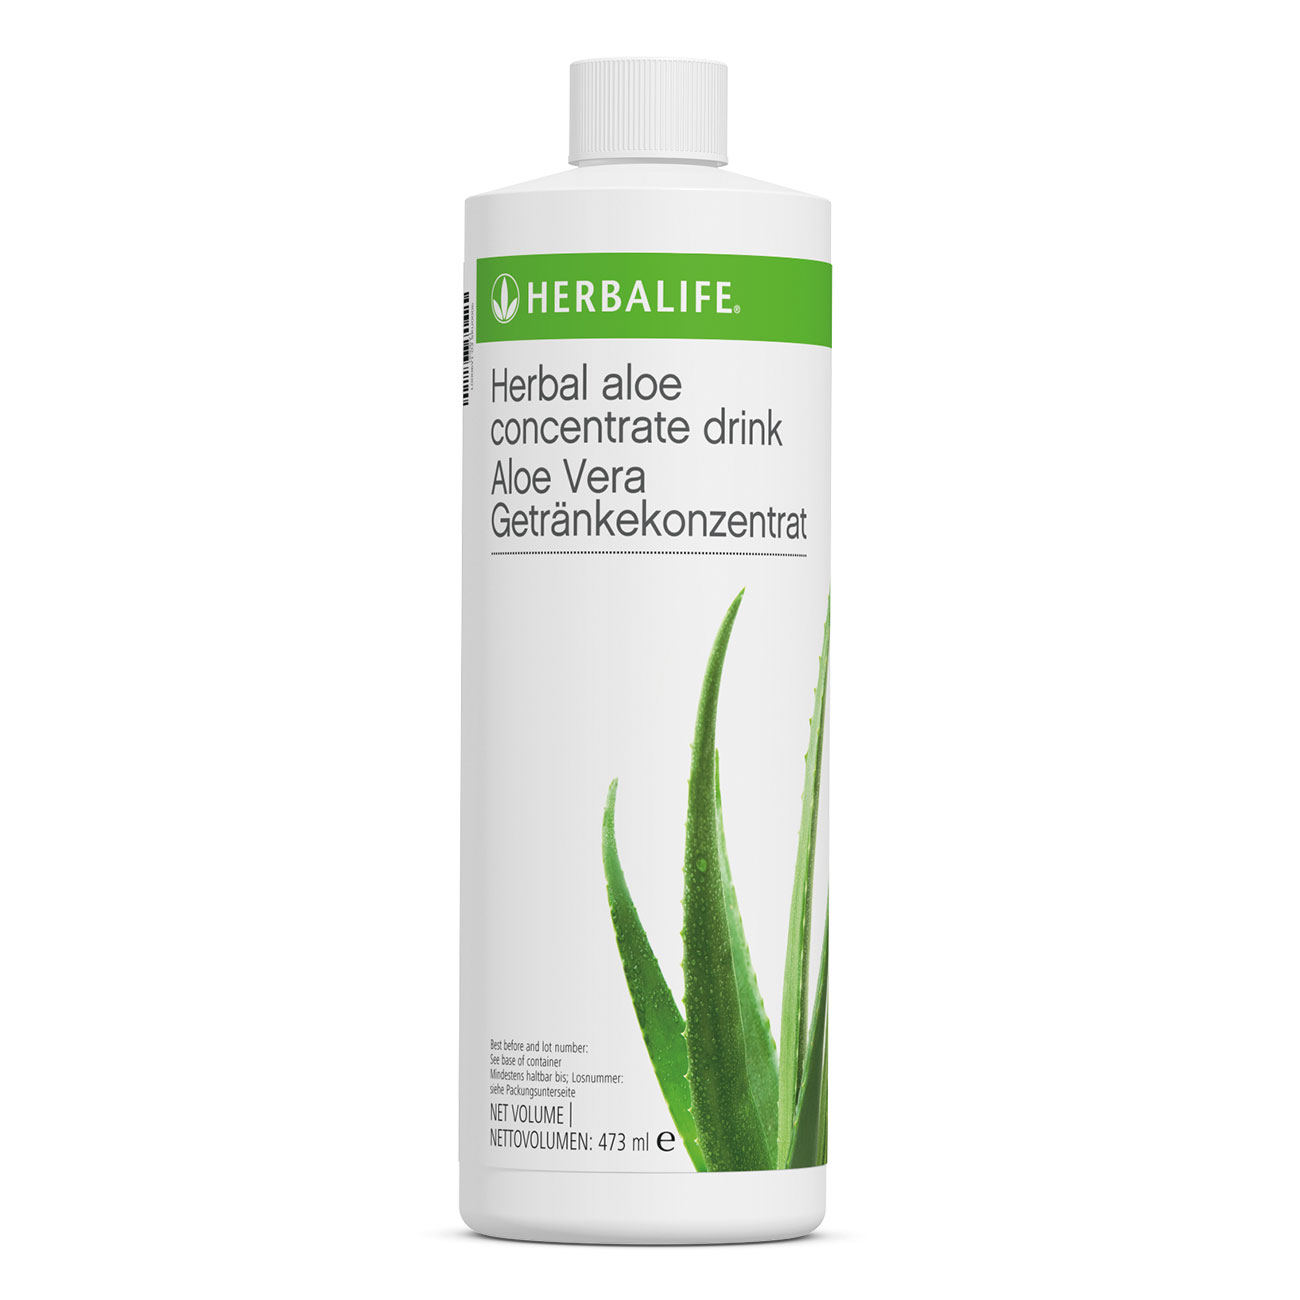 Herbal Aloe Concentrate Drink Original product shot